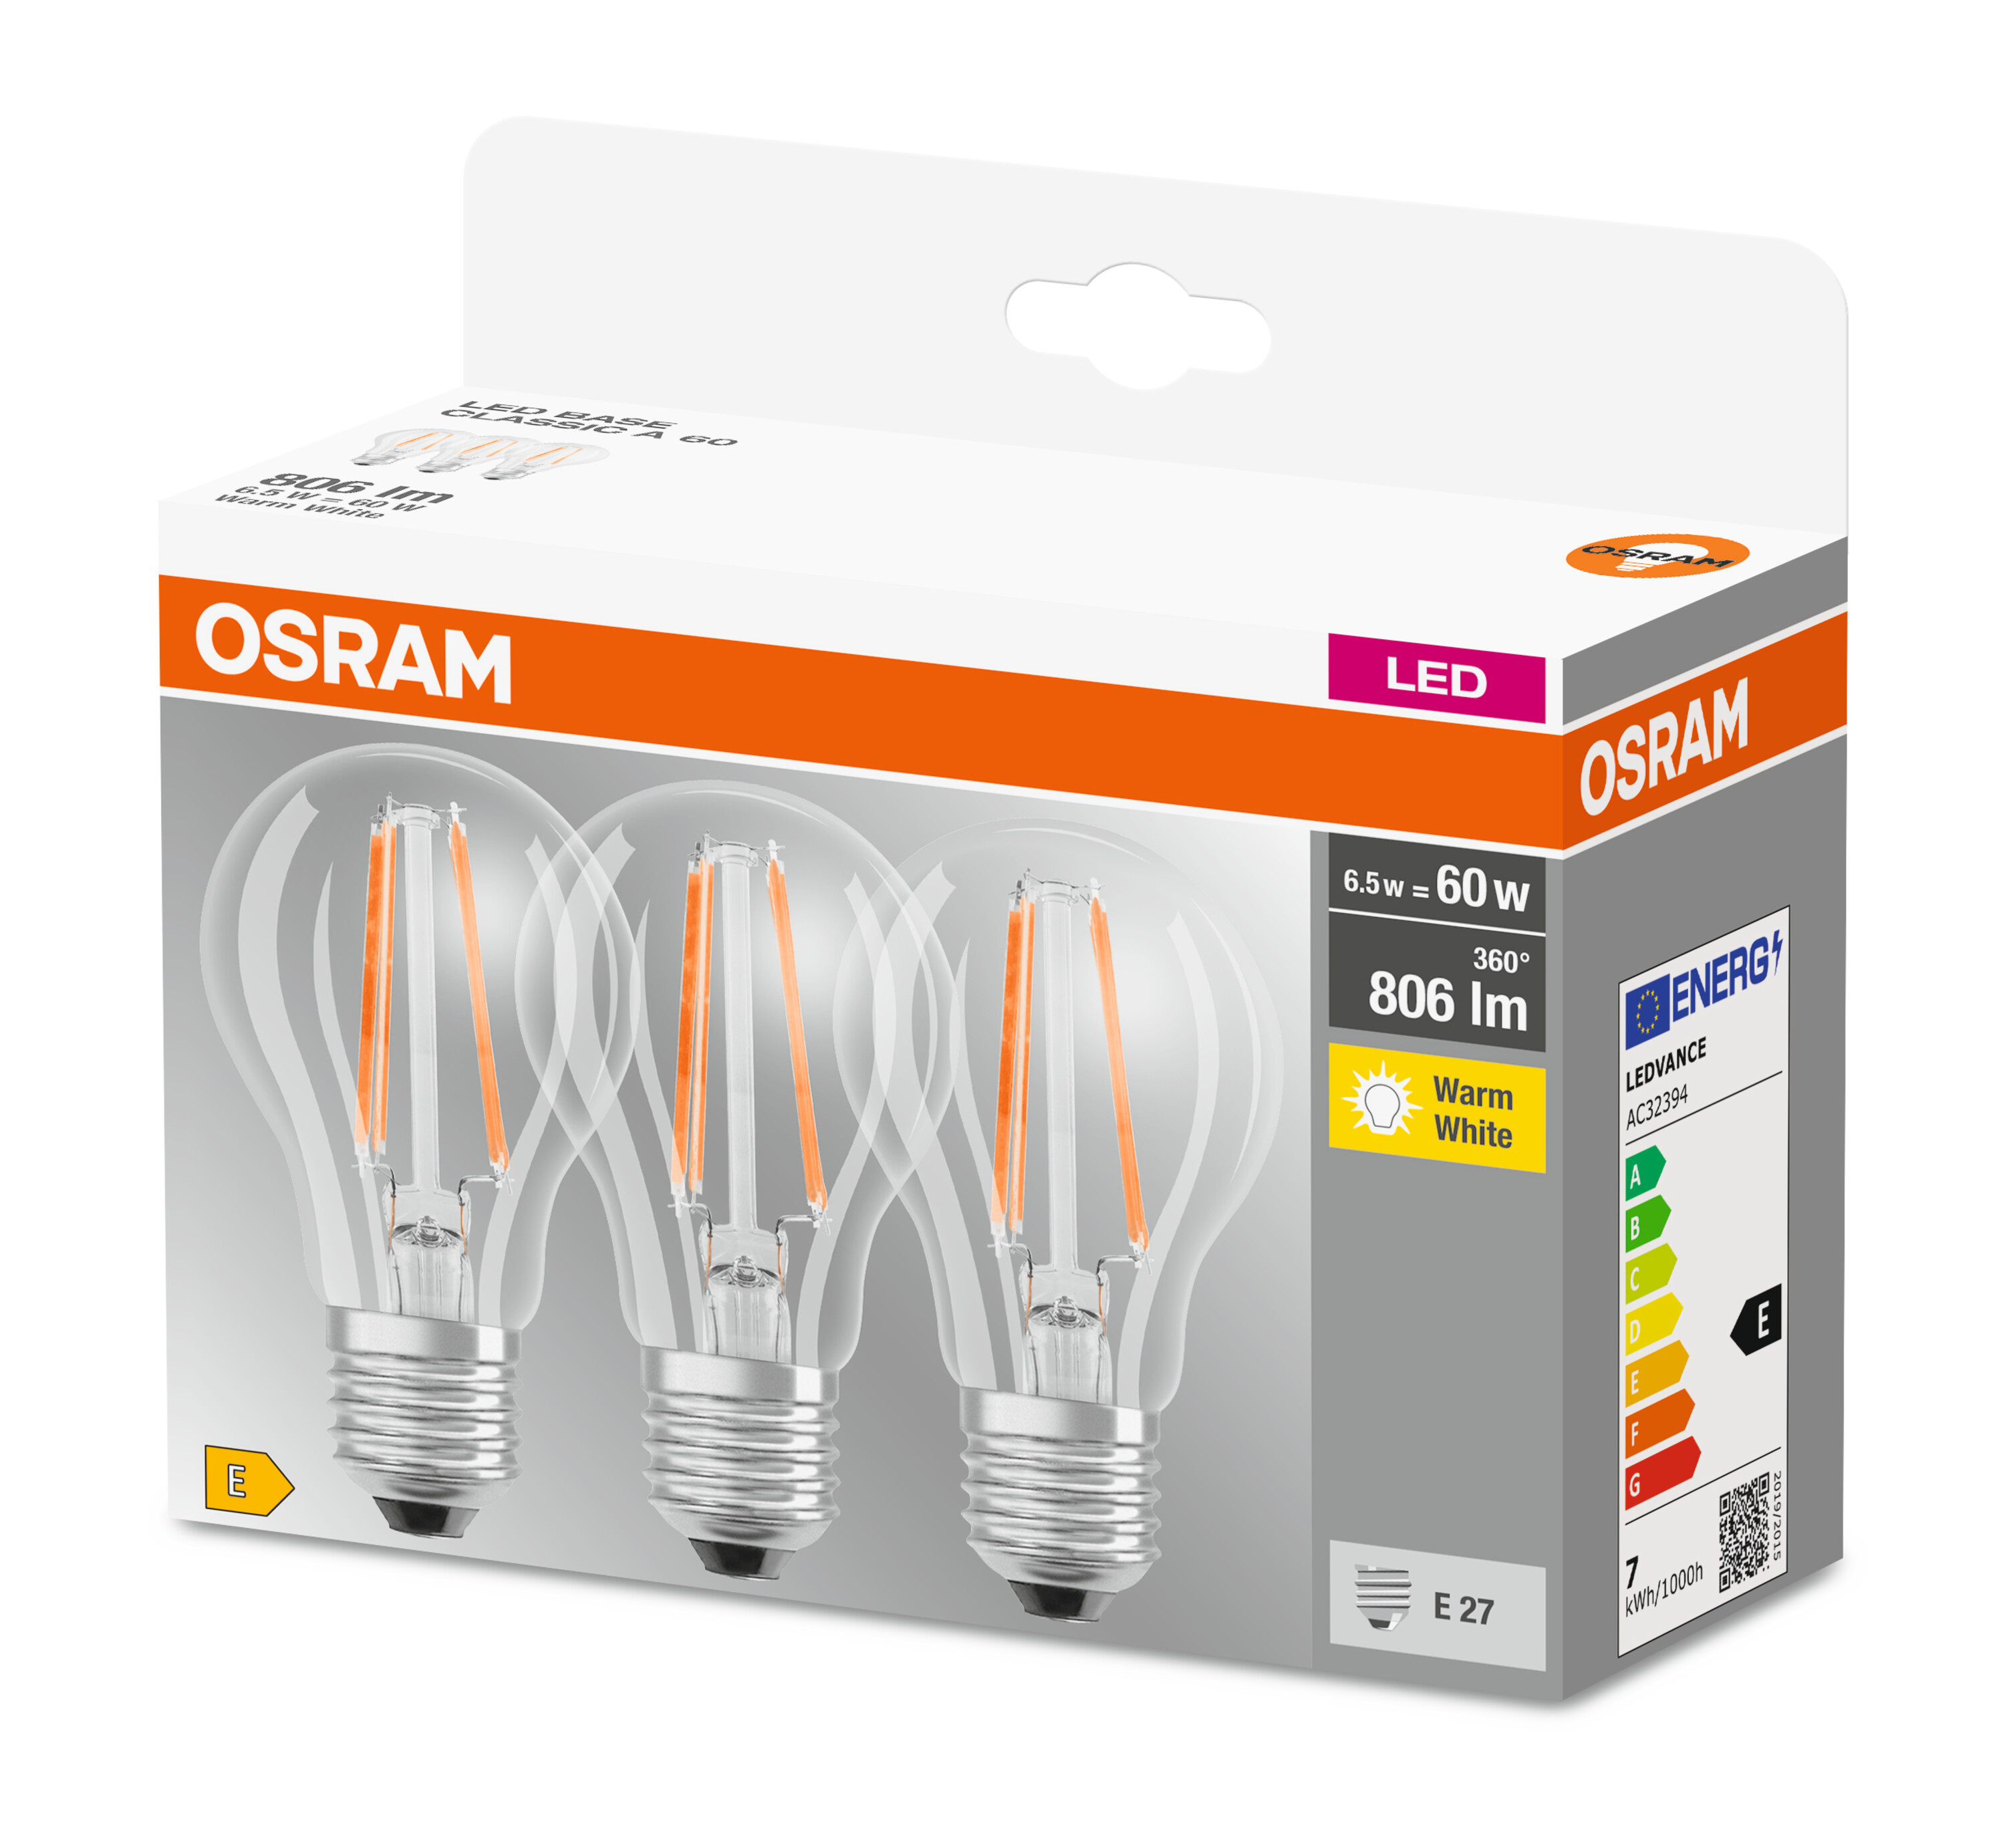 W/2700 LED LED Warmweiß CLASSIC 60 806 Lumen A BASE 6.5 OSRAM  CL E27 Lampe